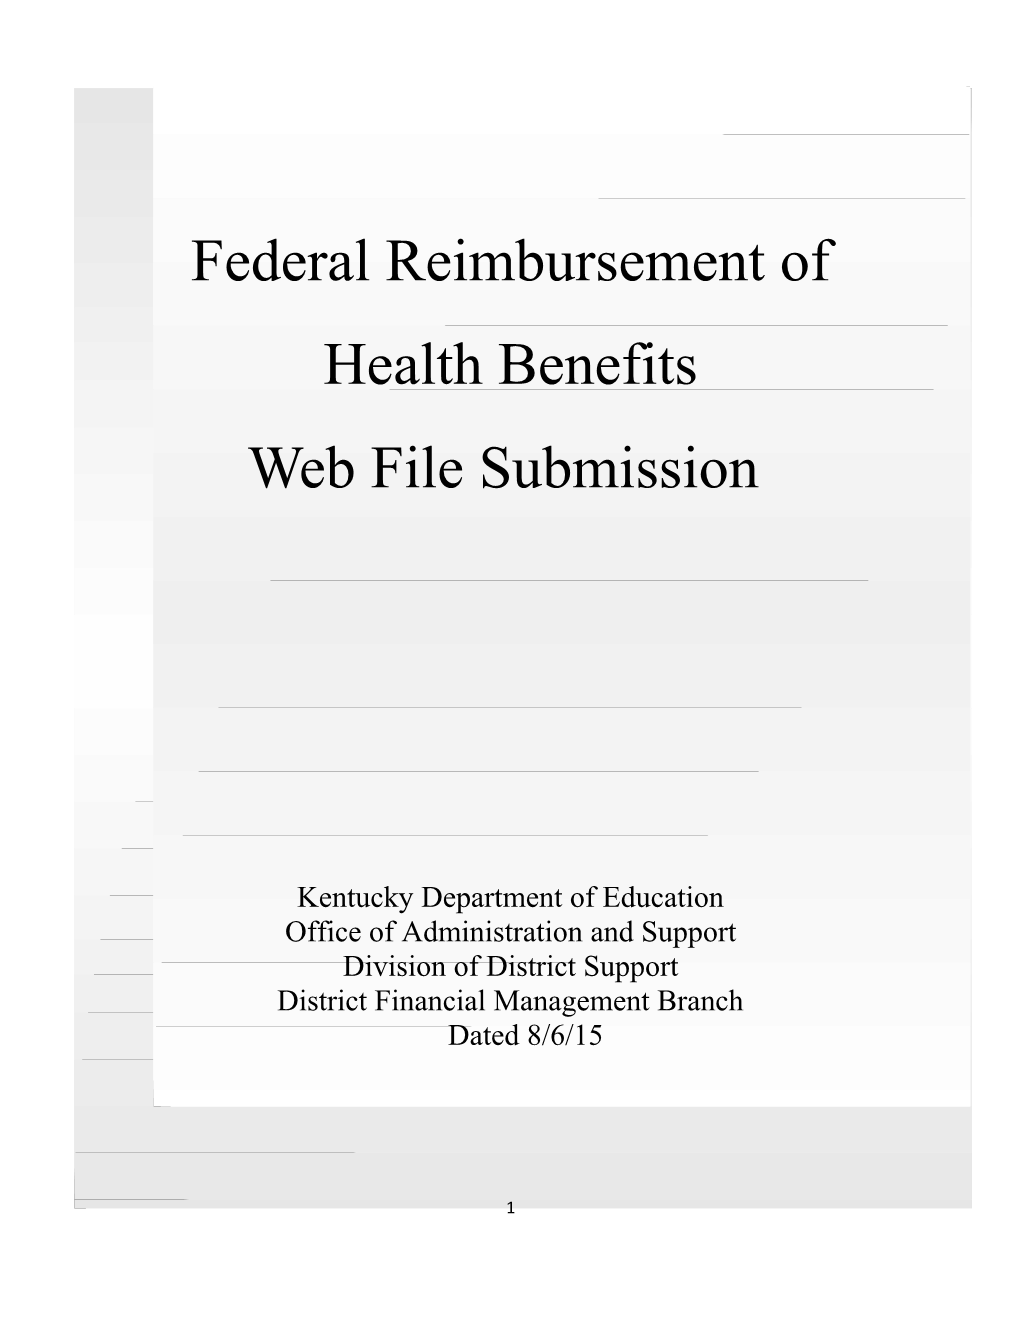 Federal Reimbursement of Health Benefits